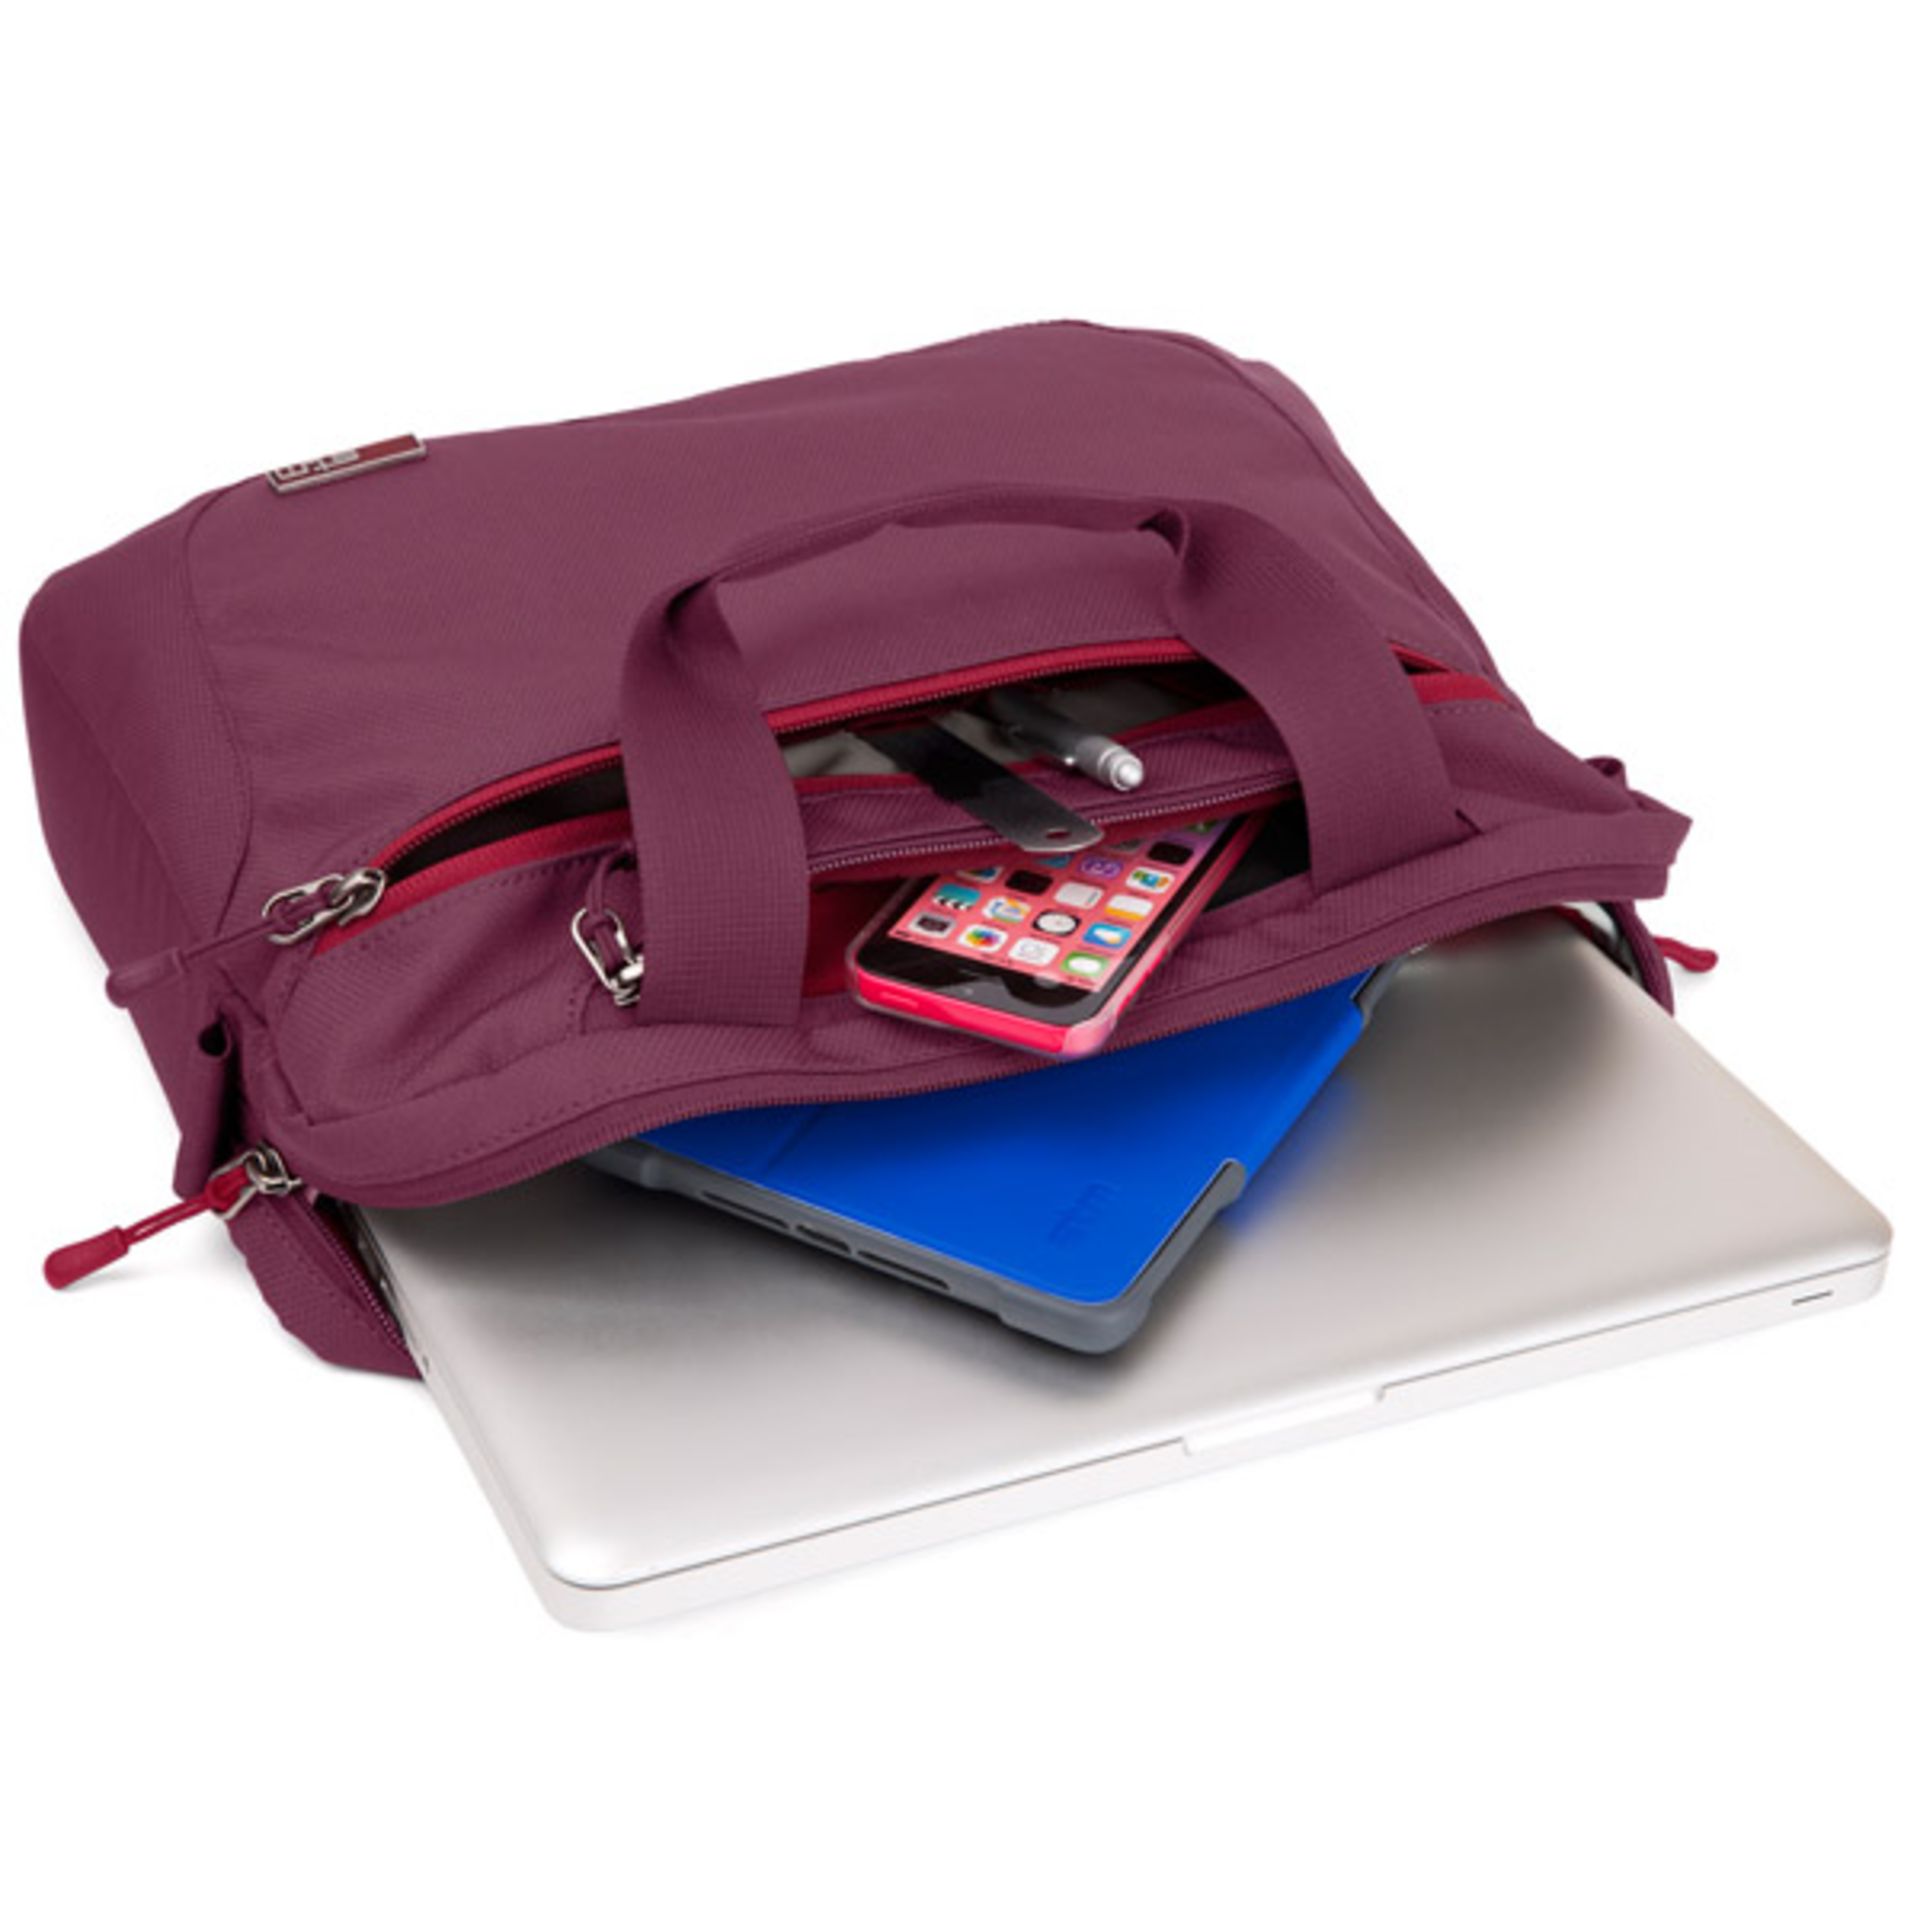 V Brand New STM Swift Medium Shoulder Bag - RRP £42.99 Amazon Price £33.57 - For Laptop/Tablet Up To